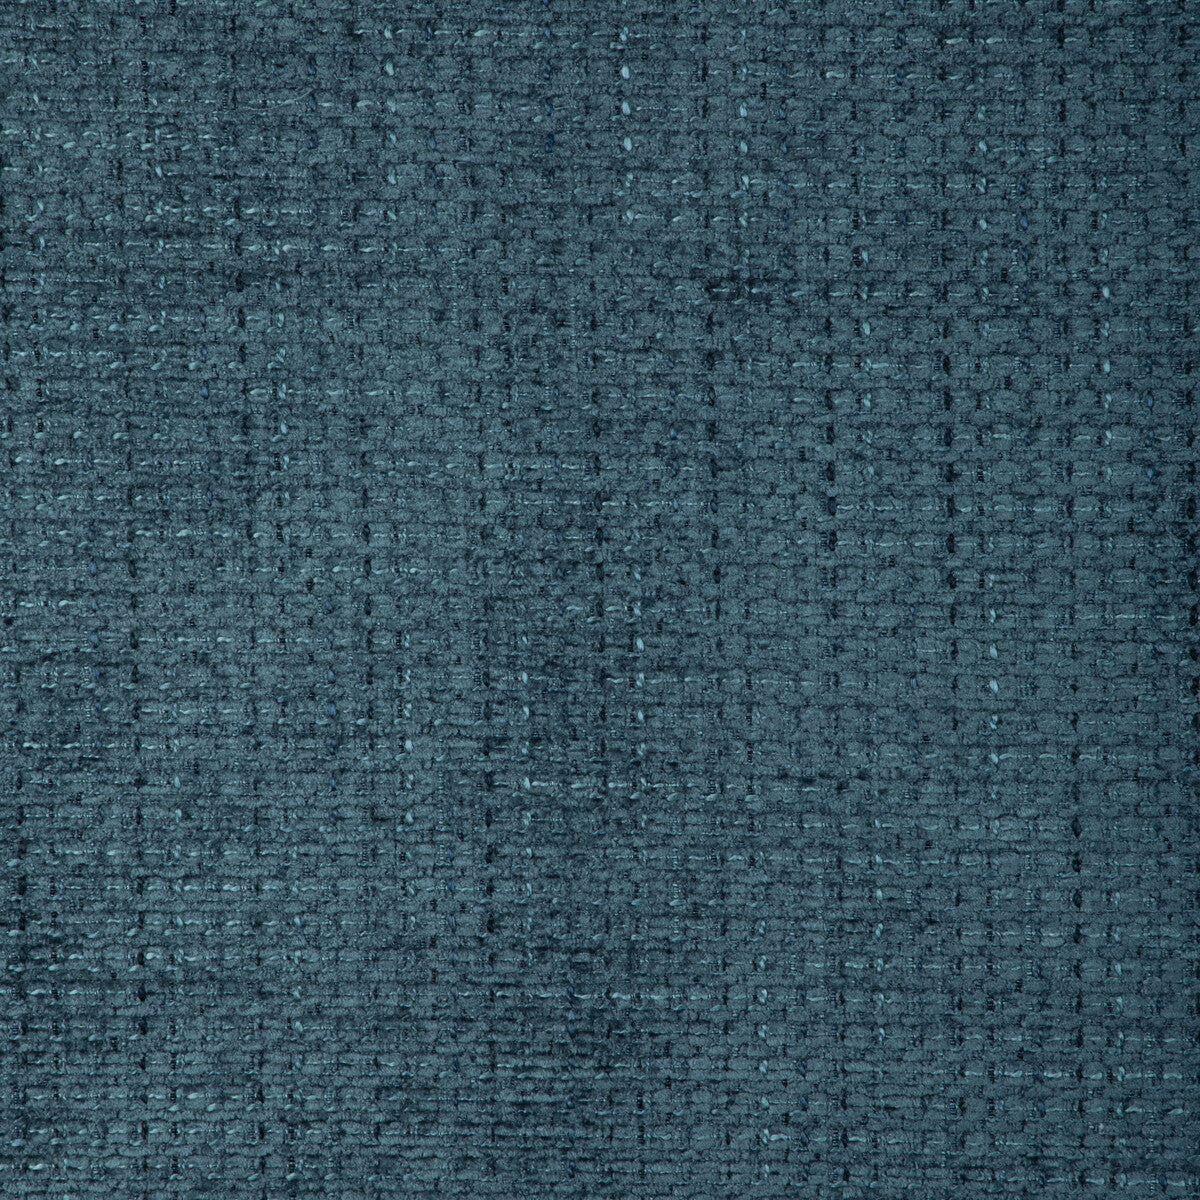 Kravet Smart fabric in 36996-55 color - pattern 36996.55.0 - by Kravet Smart